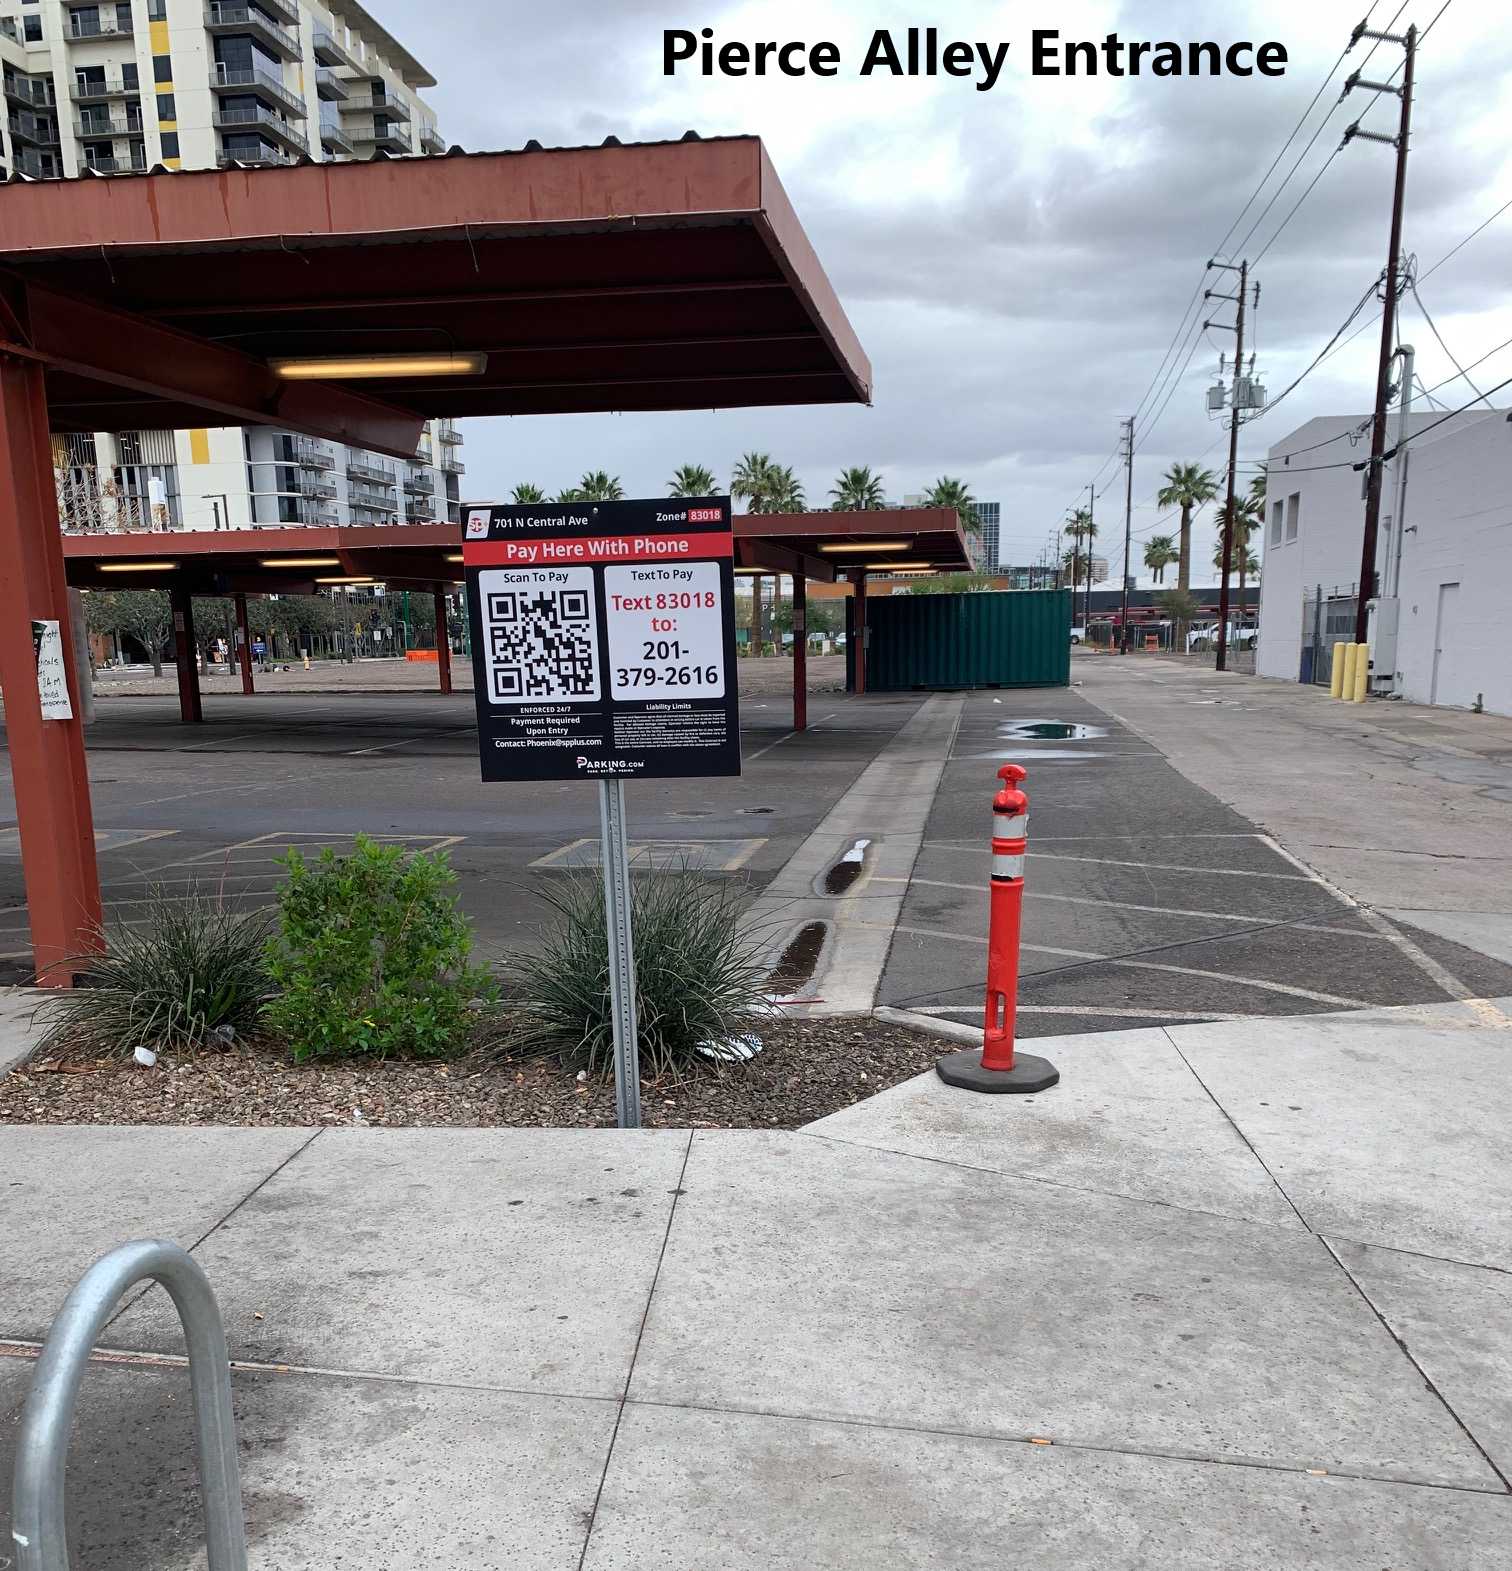 Pierce Alley Entrance